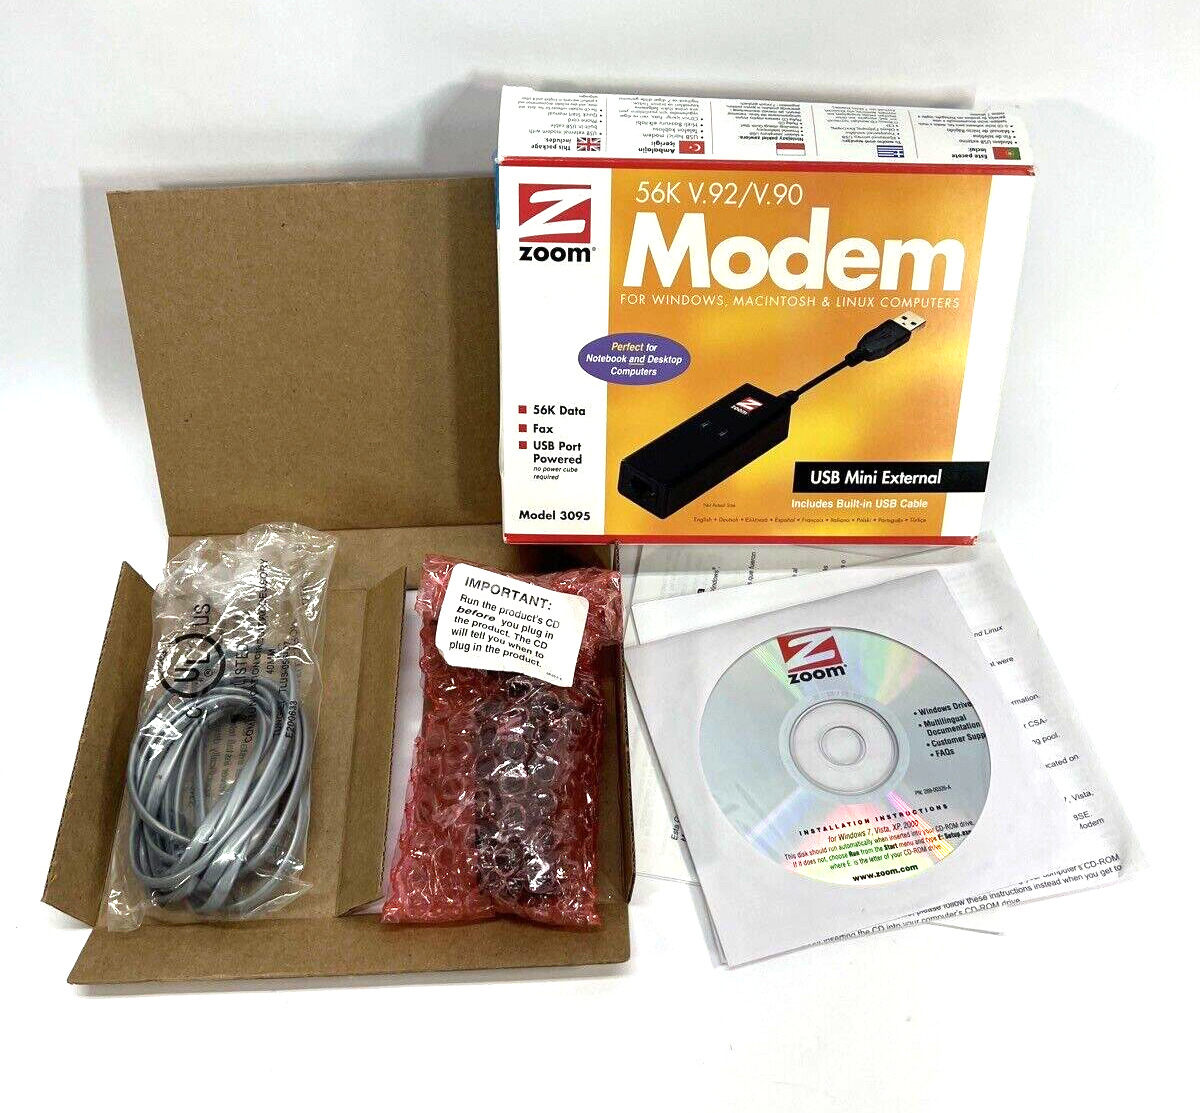 Zoom Model 3095 USB Modem - 56K V.92 Data + Fax USB Mini External